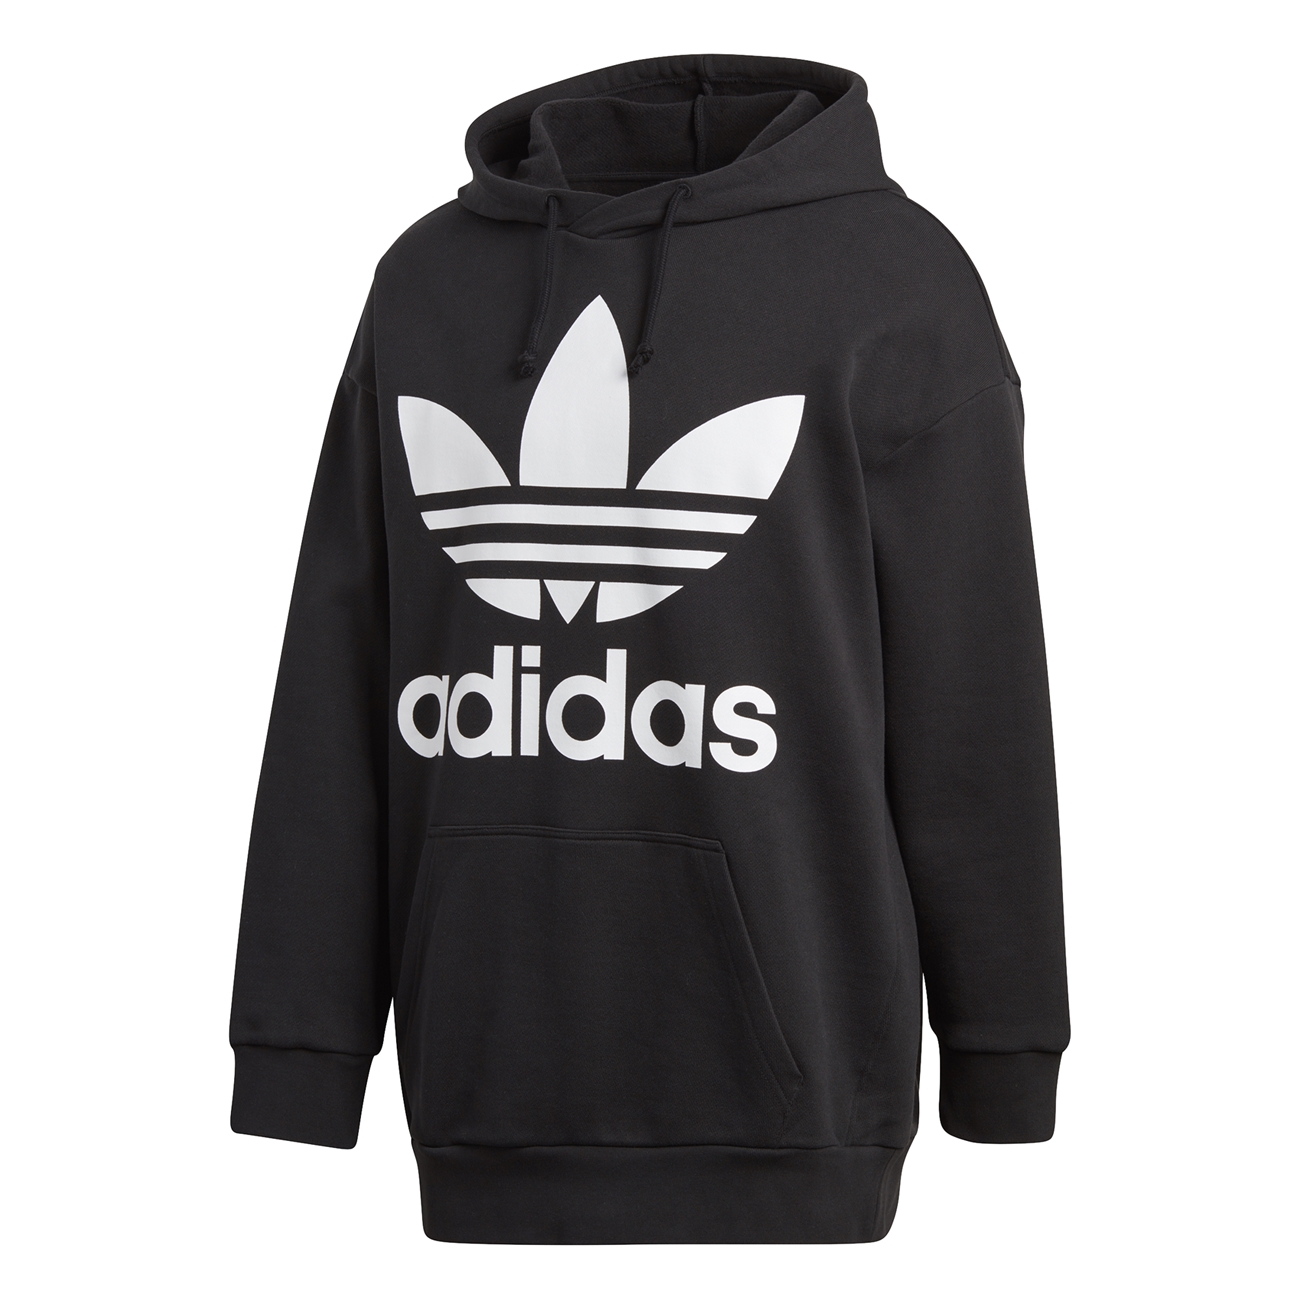 Adidas Originals Trefoil Oversized Hoodie (Black)